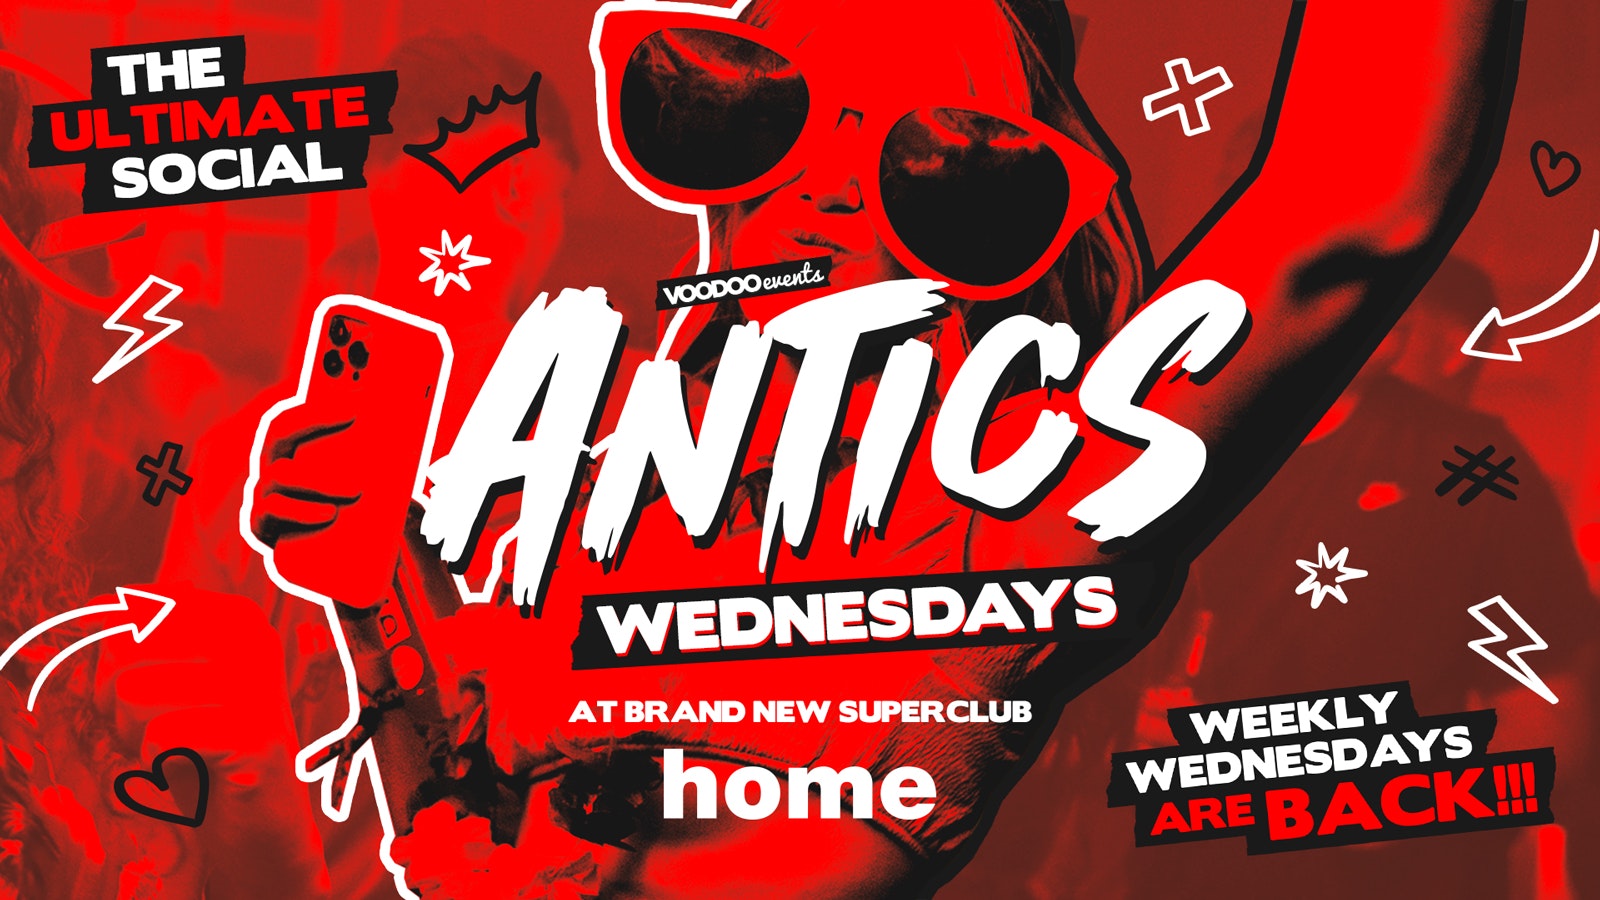 Antics @ THE BRAND NEW SUPER CLUB HOME – Wednesday 31st July